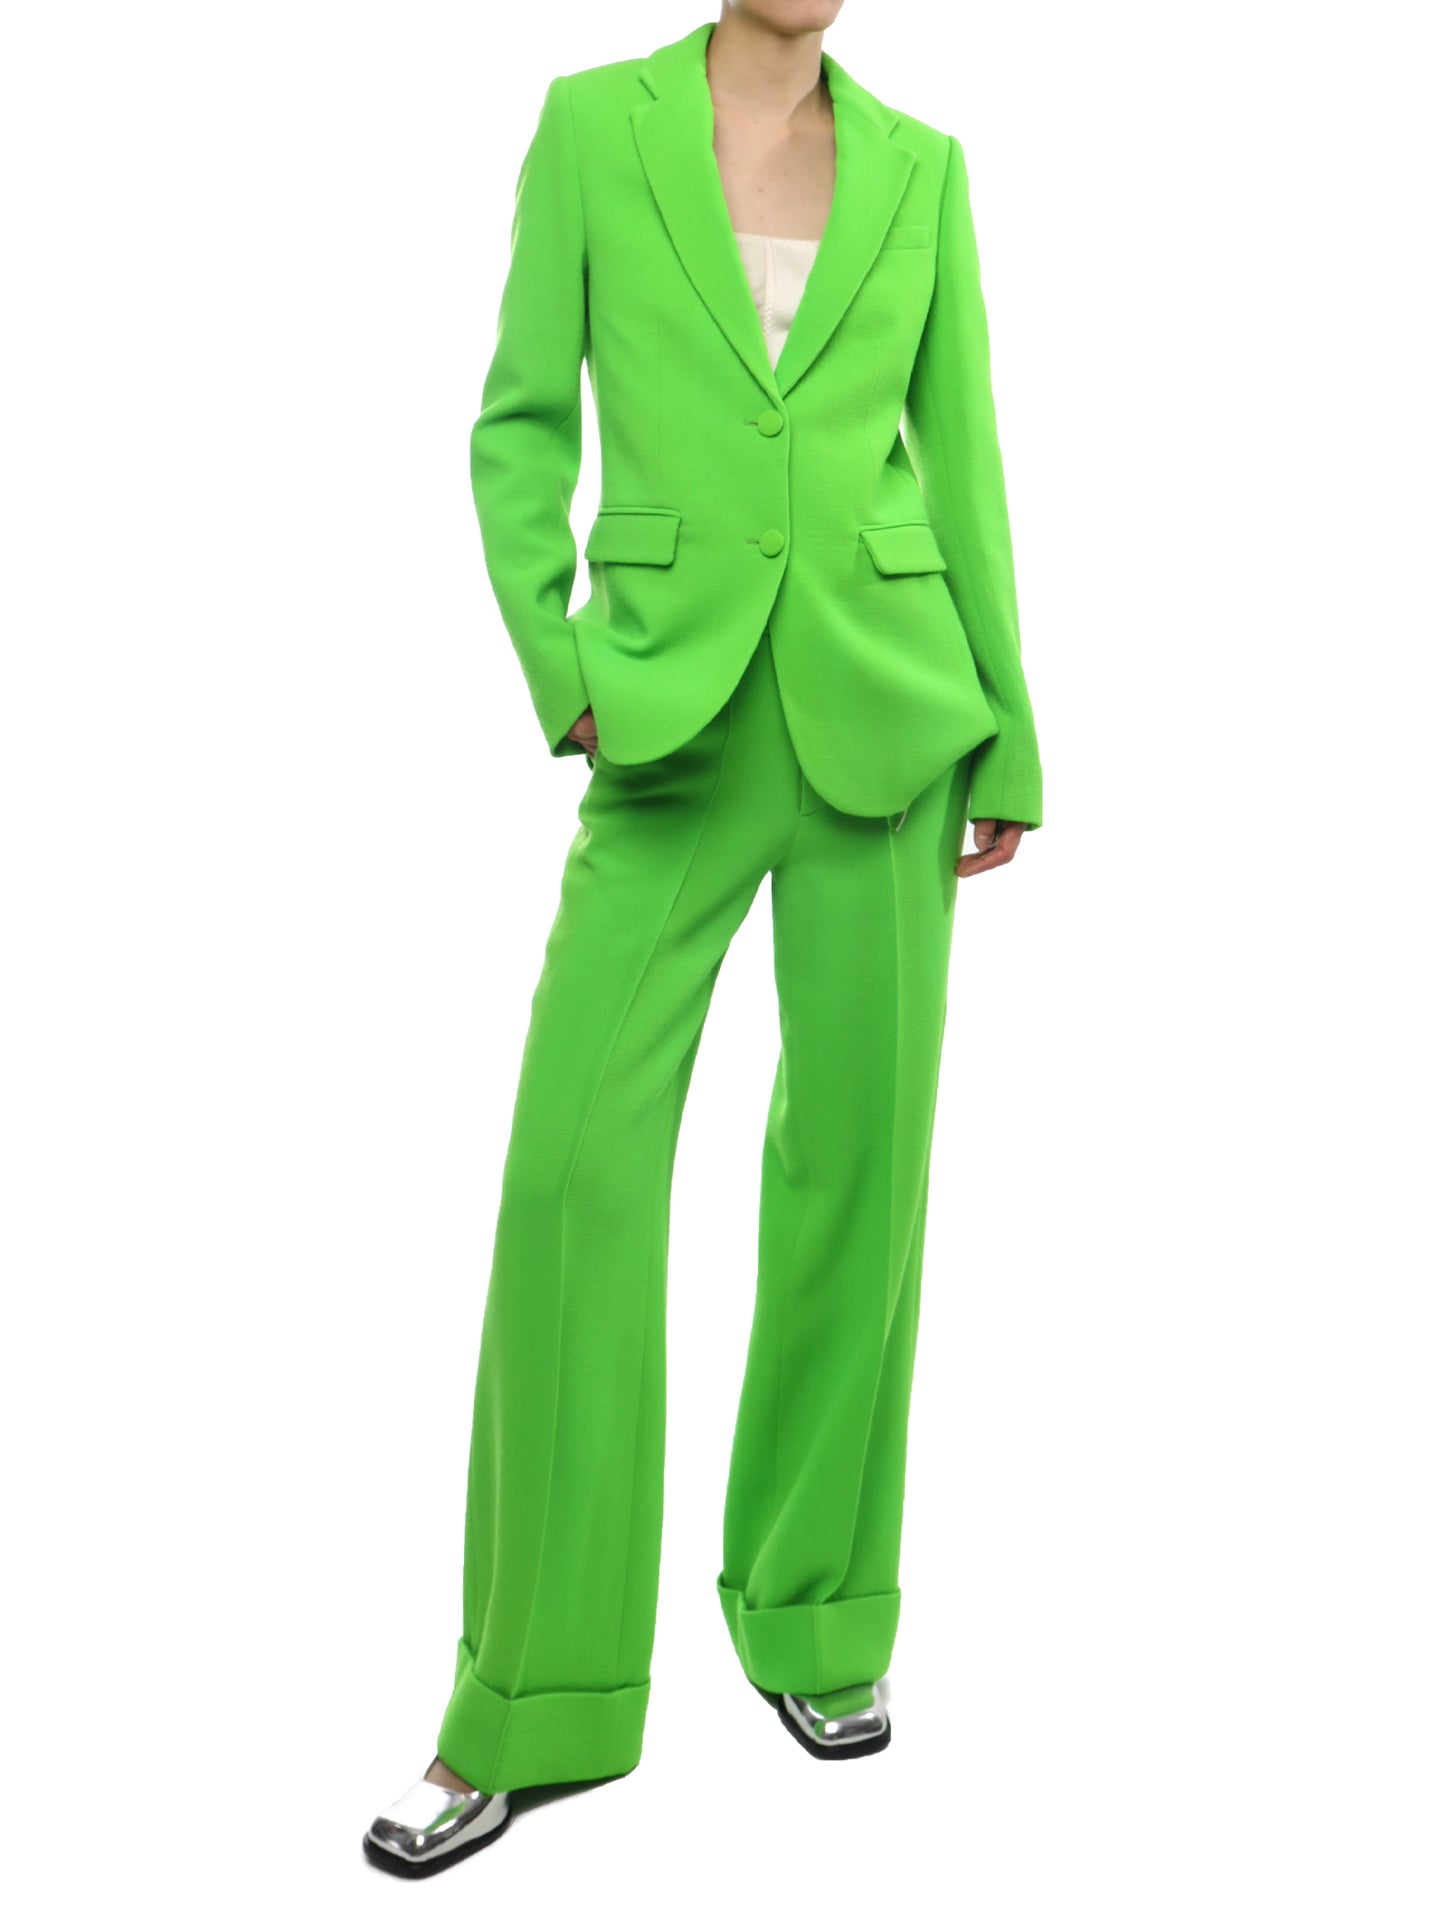 Christopher Kane Chroma Lime Green Blazer